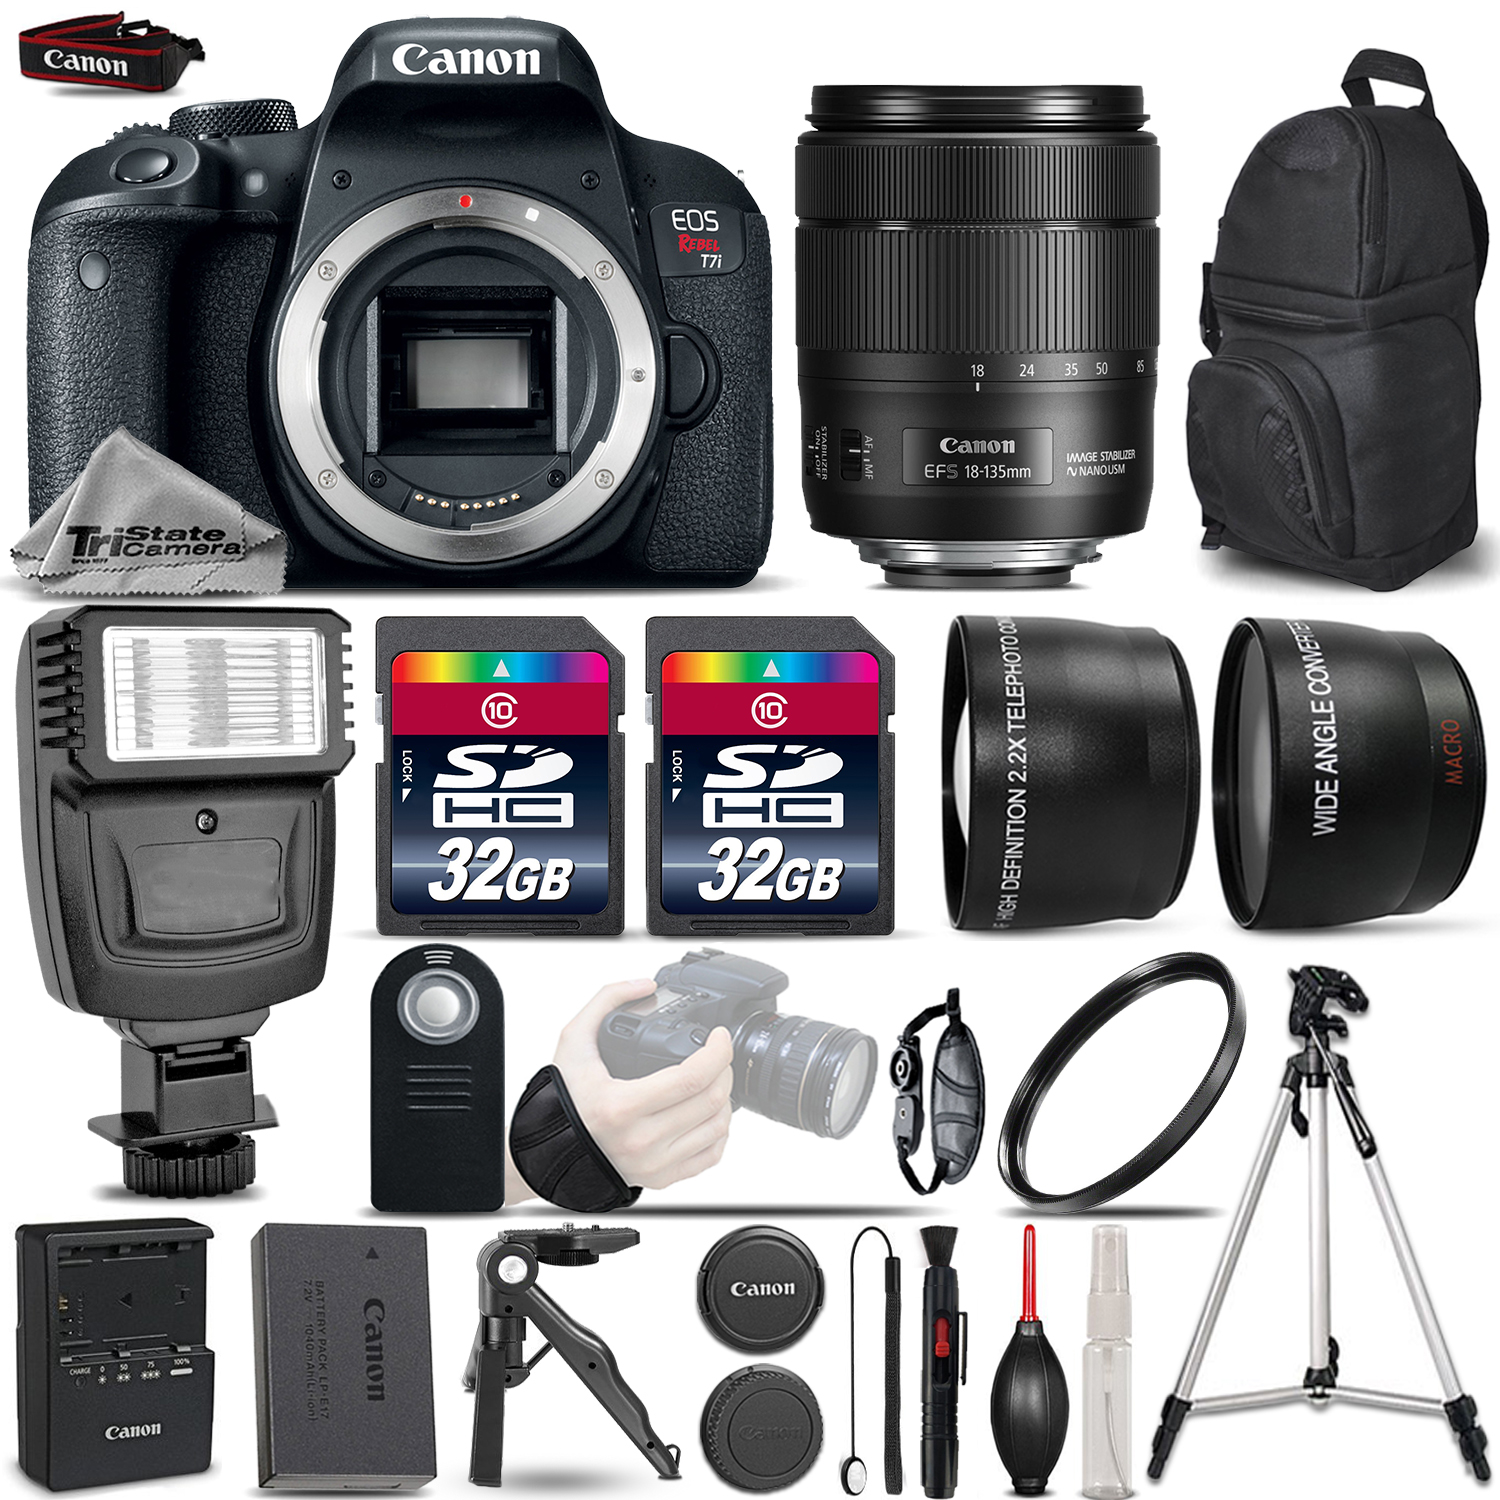 EOS Rebel T7i DSLR Camera + 18-135mm IS - 3 Lens Kit + Flash + 64GB Bundle *FREE SHIPPING*